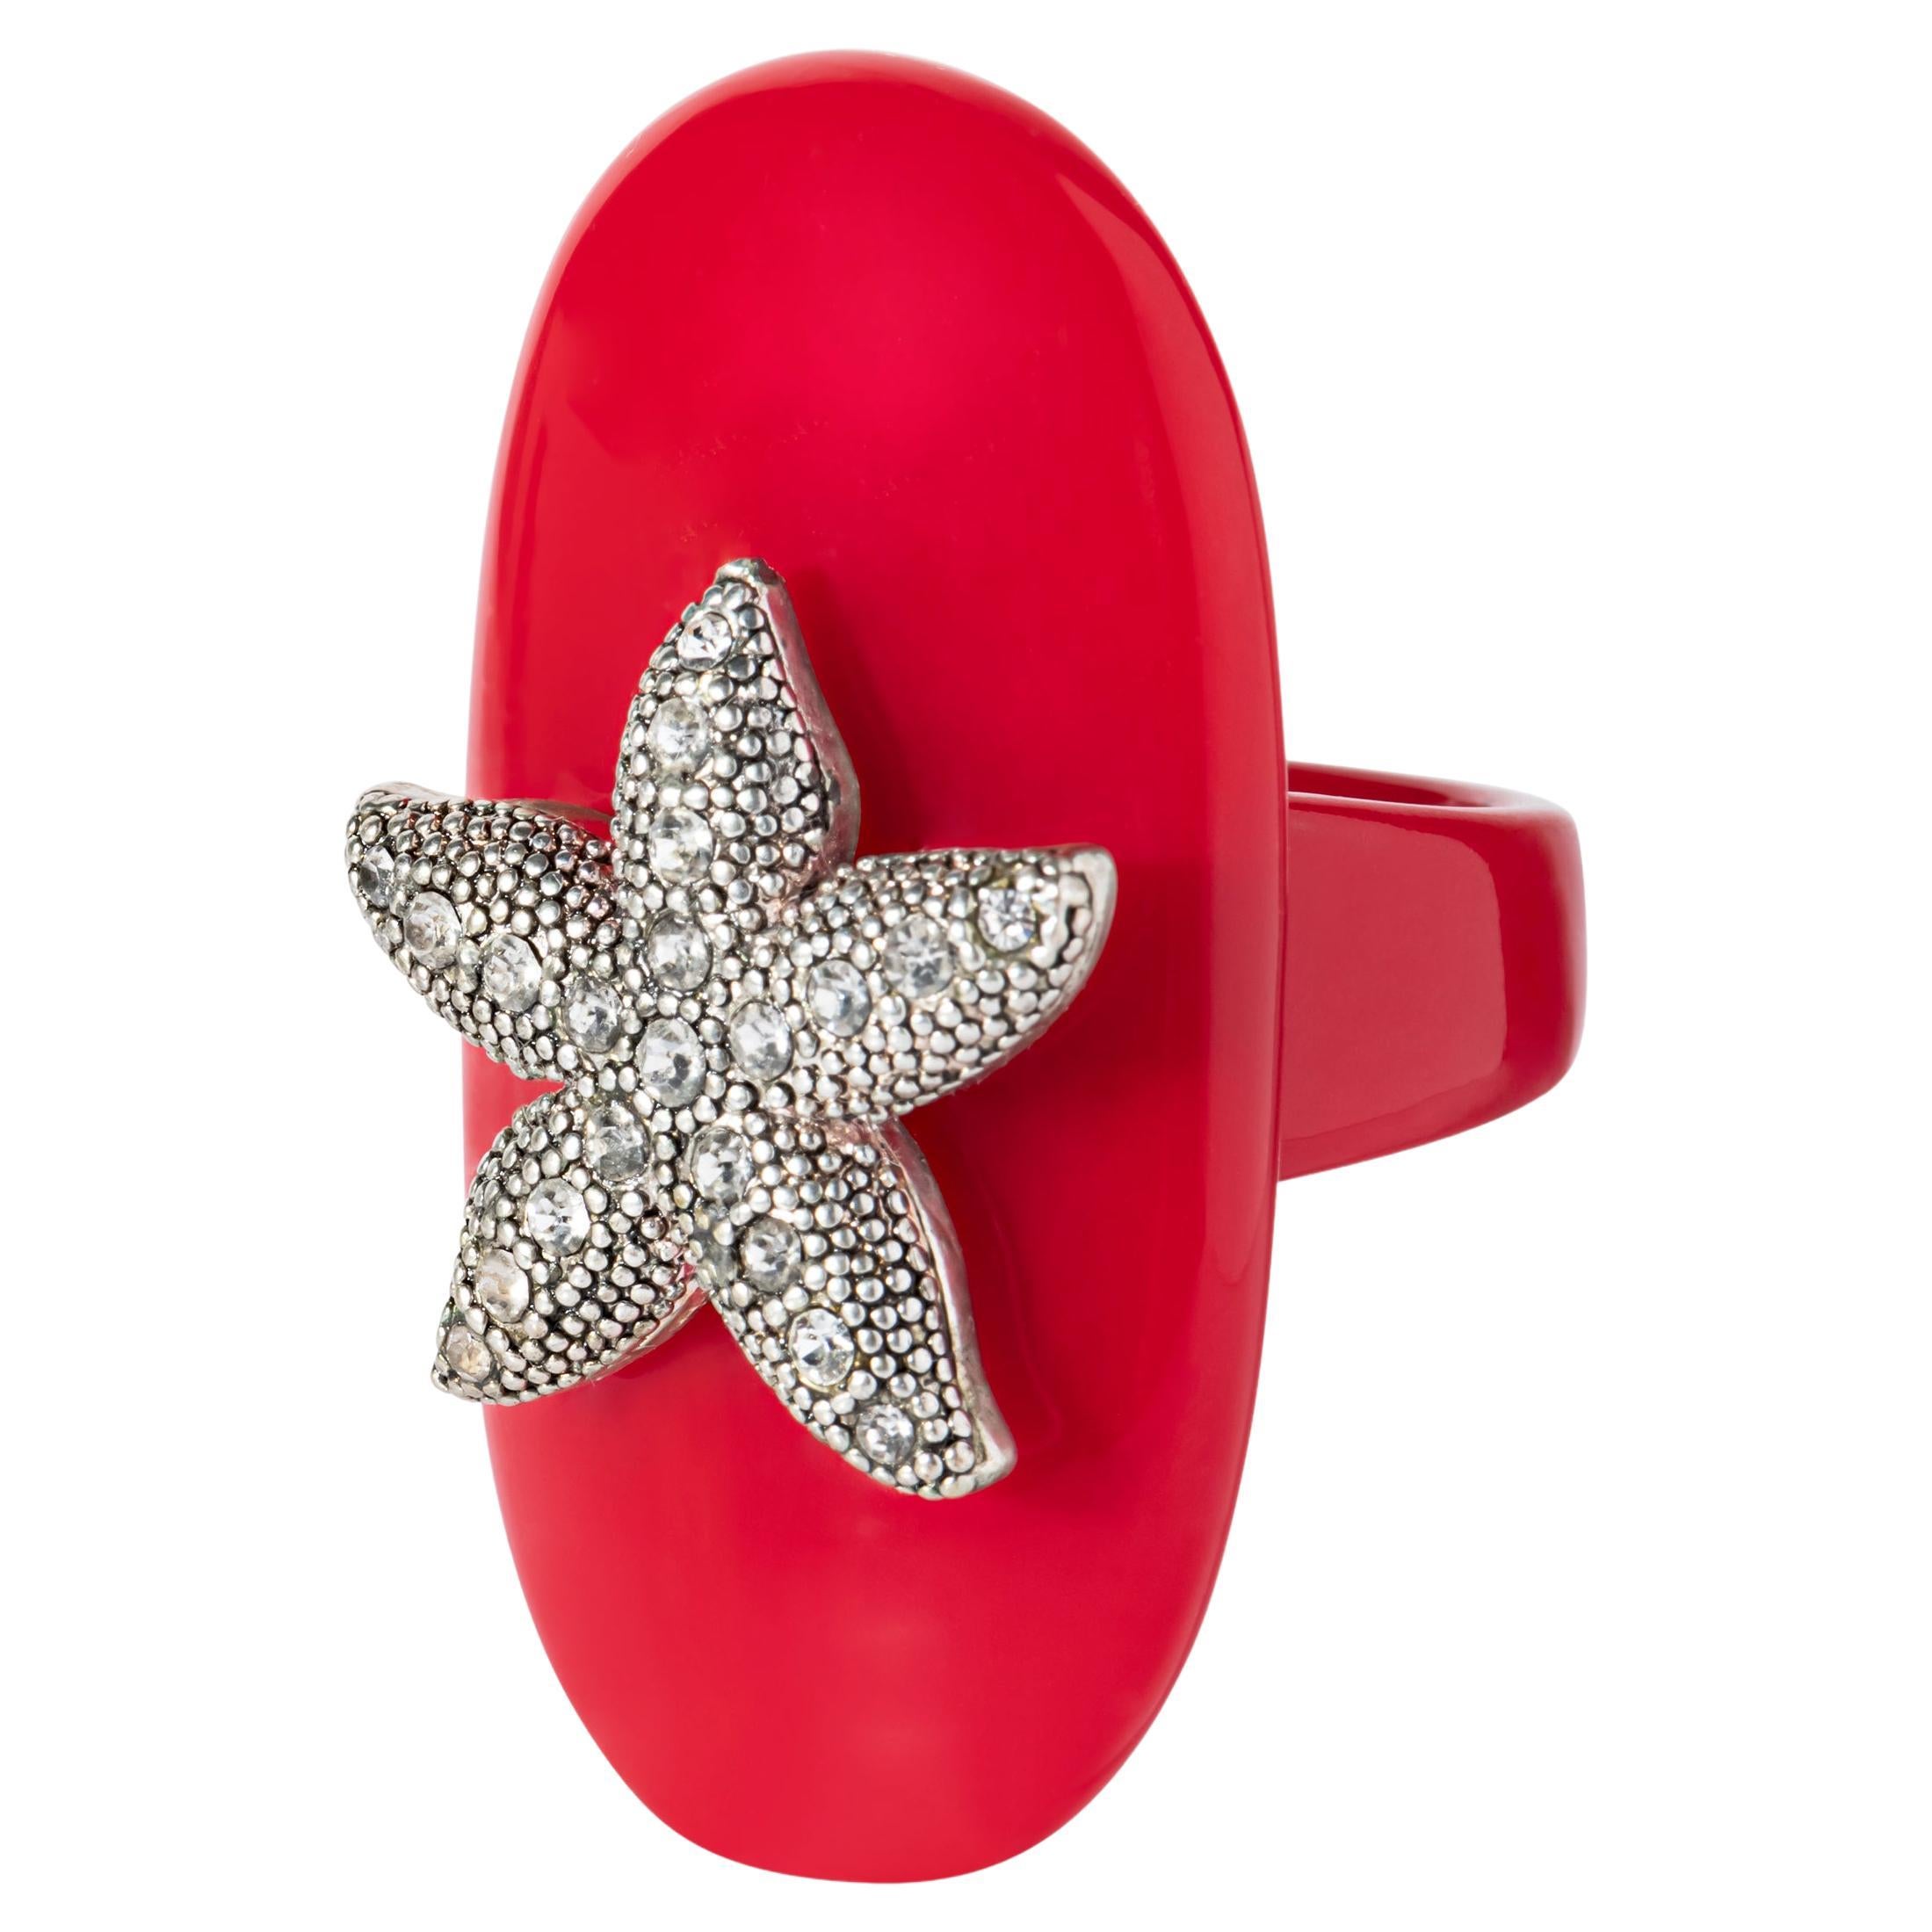 Bochic “Ikon” Red Star Fish Bijoux Ring 70s style 